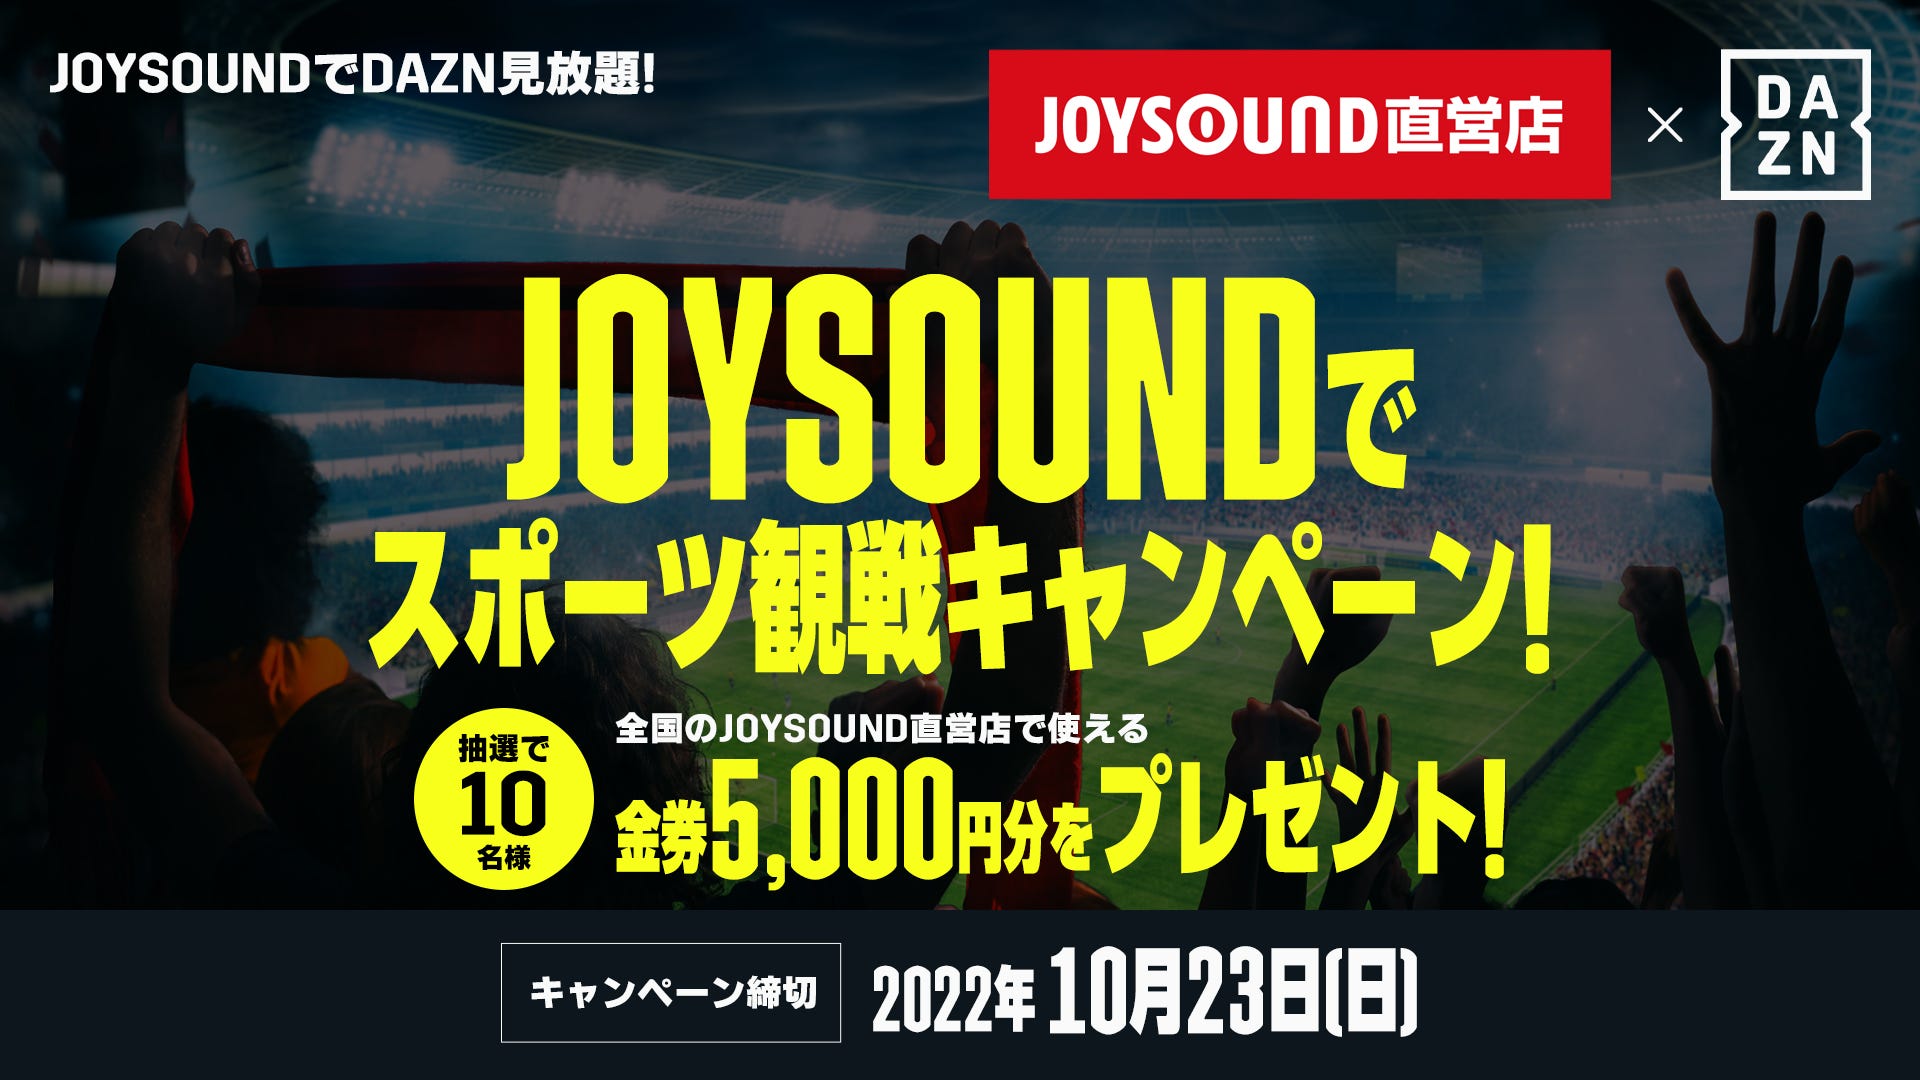 Joysound 直営店と Dazn ダゾーン のスポーツ観戦キャンペーンが本日開始 抽選10名に金券がプレゼント Goal Com 日本